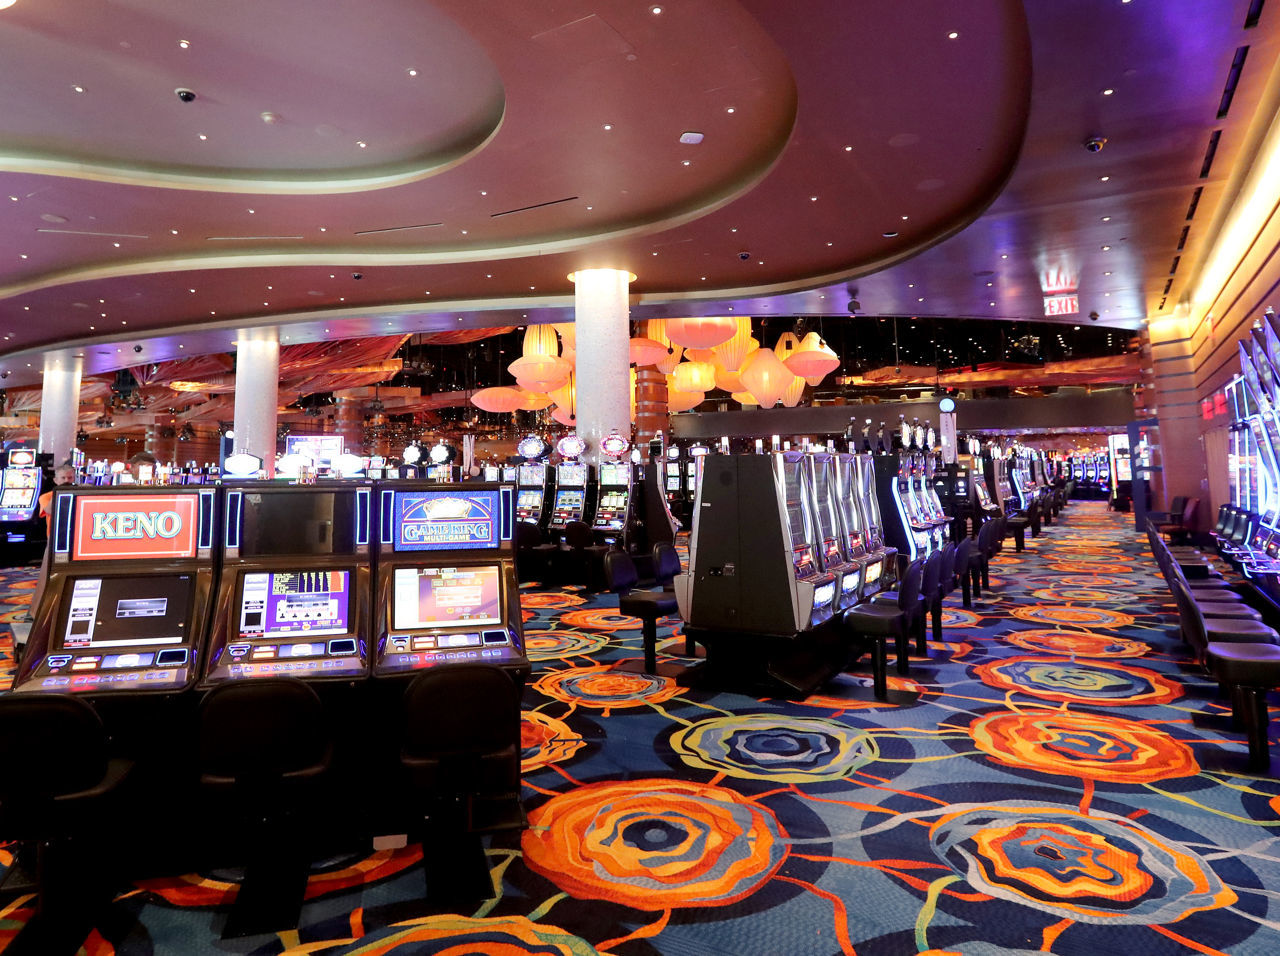 oceans resorts casino